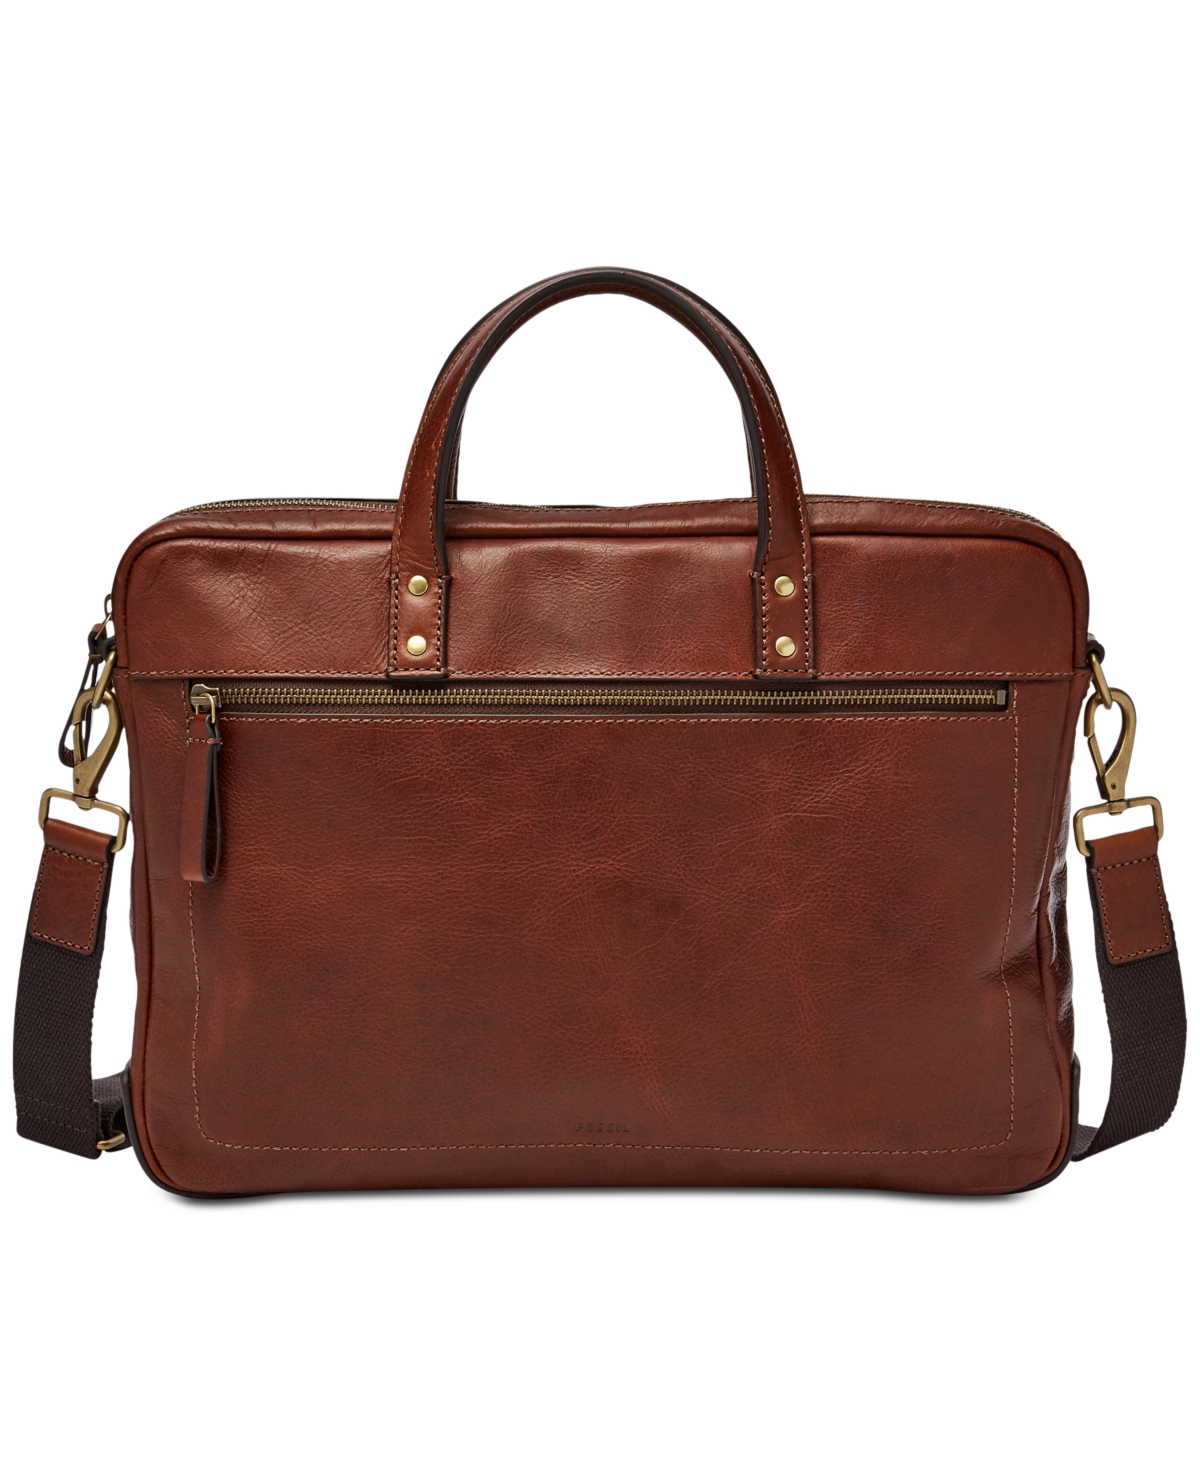 Men's Haskell Leather Briefcase - Cognac